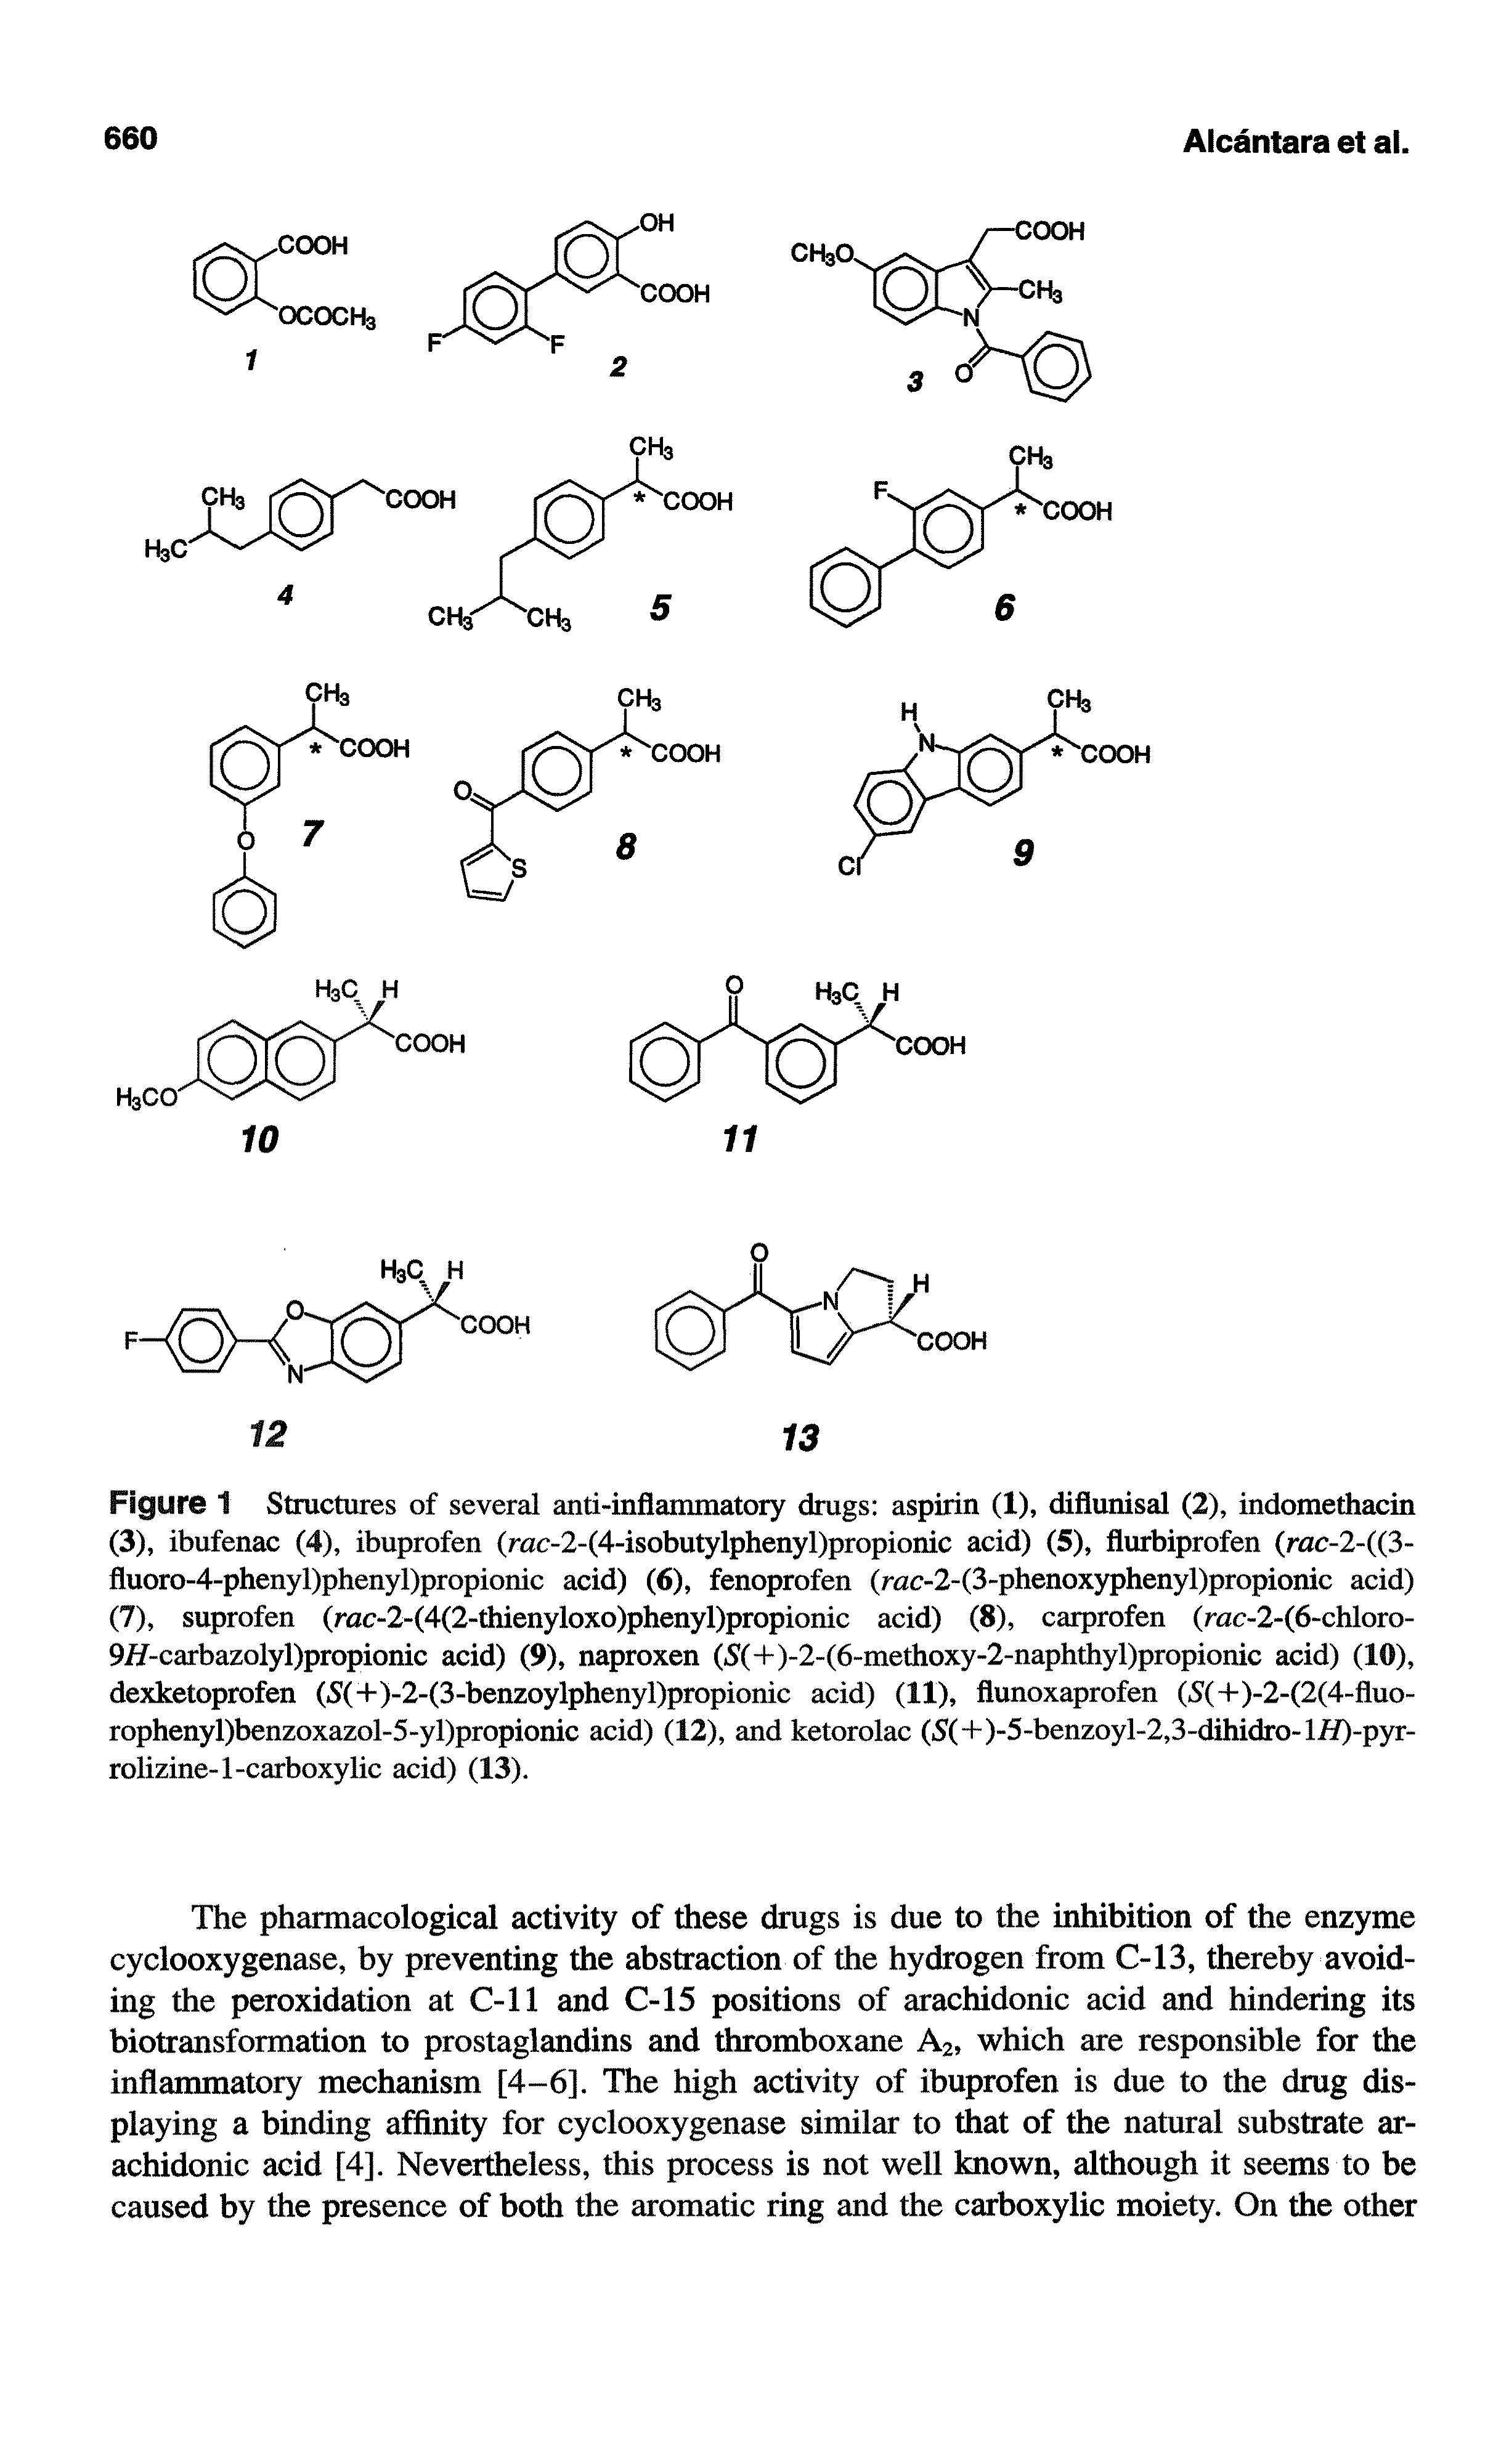 Figure 1 Structures of several anti-infiammatory drugs aspirin (1), difiunisal (2), indomethacin (3), ibufenac (4), ibuprofen (rac-2-(4-isobutylphenyl)propionic acid) (5), flurbiprofen (rac-2-((3-fluoro-4-phenyl)phenyl)propionic acid) (6), fenoprofen (rac-2-(3-phenoxyphenyl)propionic acid) (7), suprofen (rac-2-(4(2-thienyloxo)phenyl)propionic acid) (8), carprofen (rac-2-(6-chloro-9/f-carbazolyl)propionic acid) (9), naproxen (S(+)-2-(6-methoxy-2-naphthyl)propionic acid) (10), dexketoprofen (S(+)-2-(3-benzoylphenyl)propionic acid) (11), flunoxaprofen (5(+)-2-(2(4-fluo-rophenyl)benzoxazol-5-yl)propionic acid) (12), and ketorolac (S(+)-5-benzoyl-2,3-dihidro-lfl)-pyr-rolizine-1-carboxylic acid) (13).